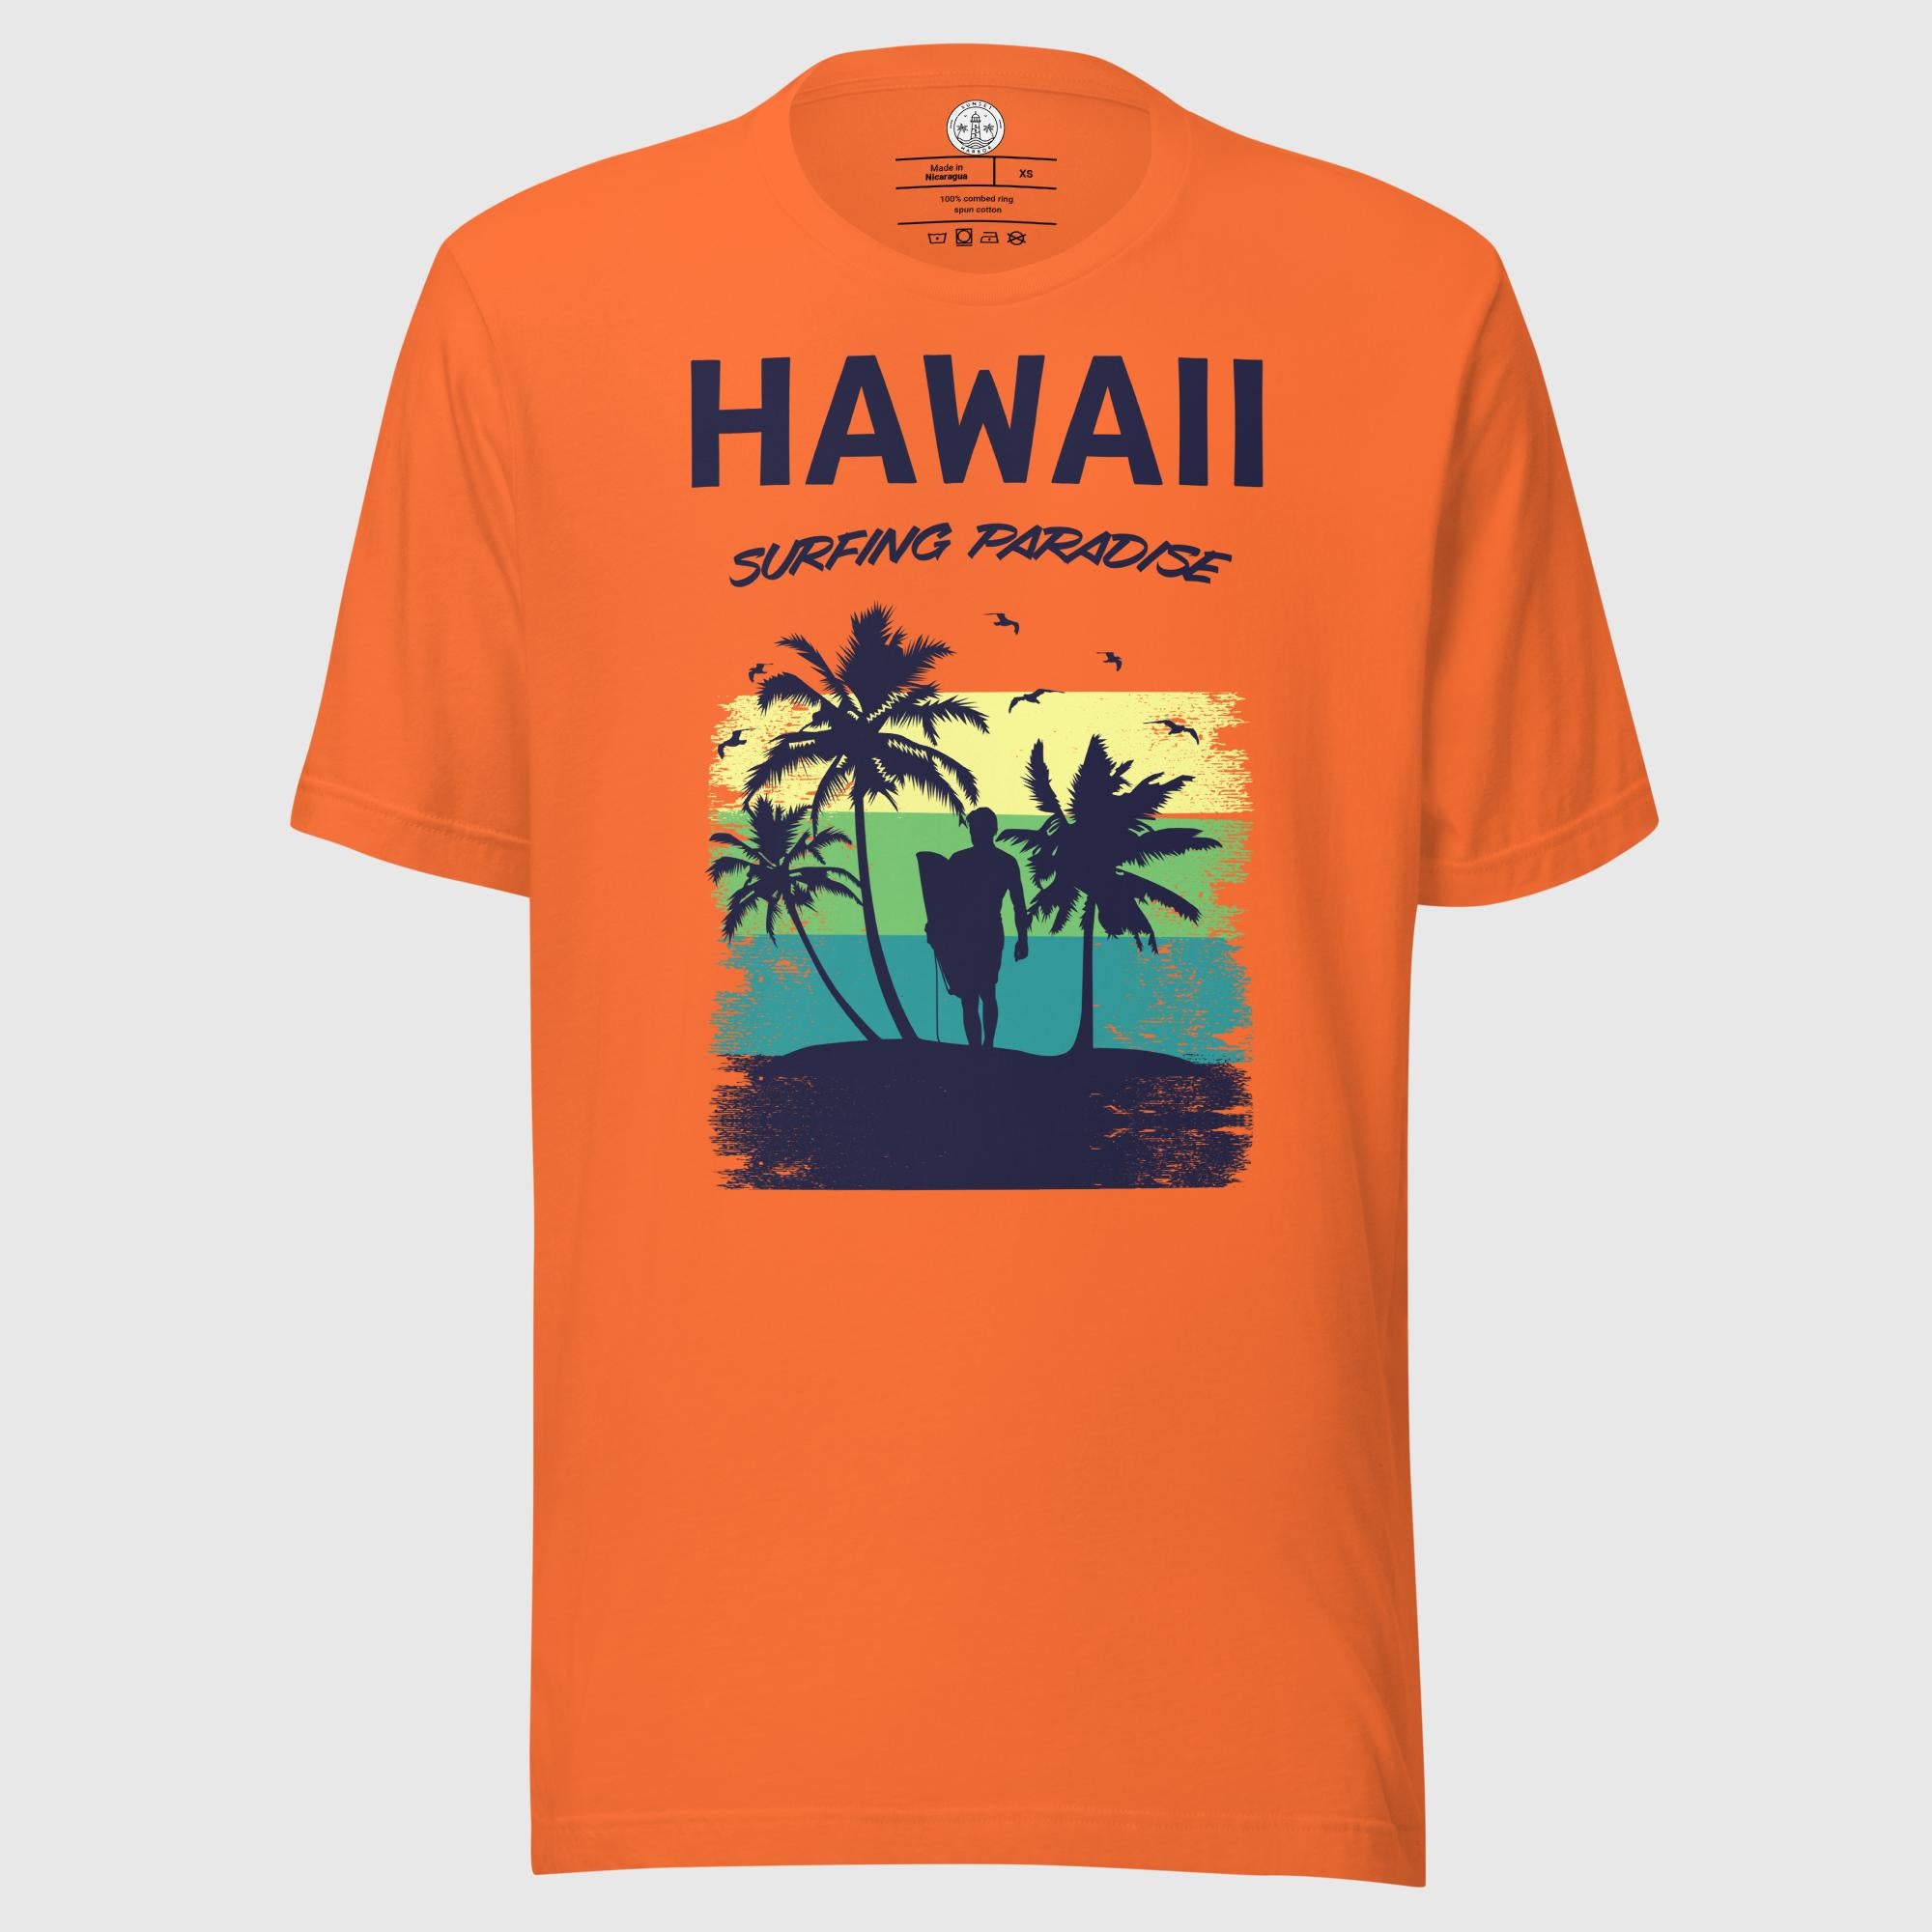 Unisex t-shirt - Hawaii